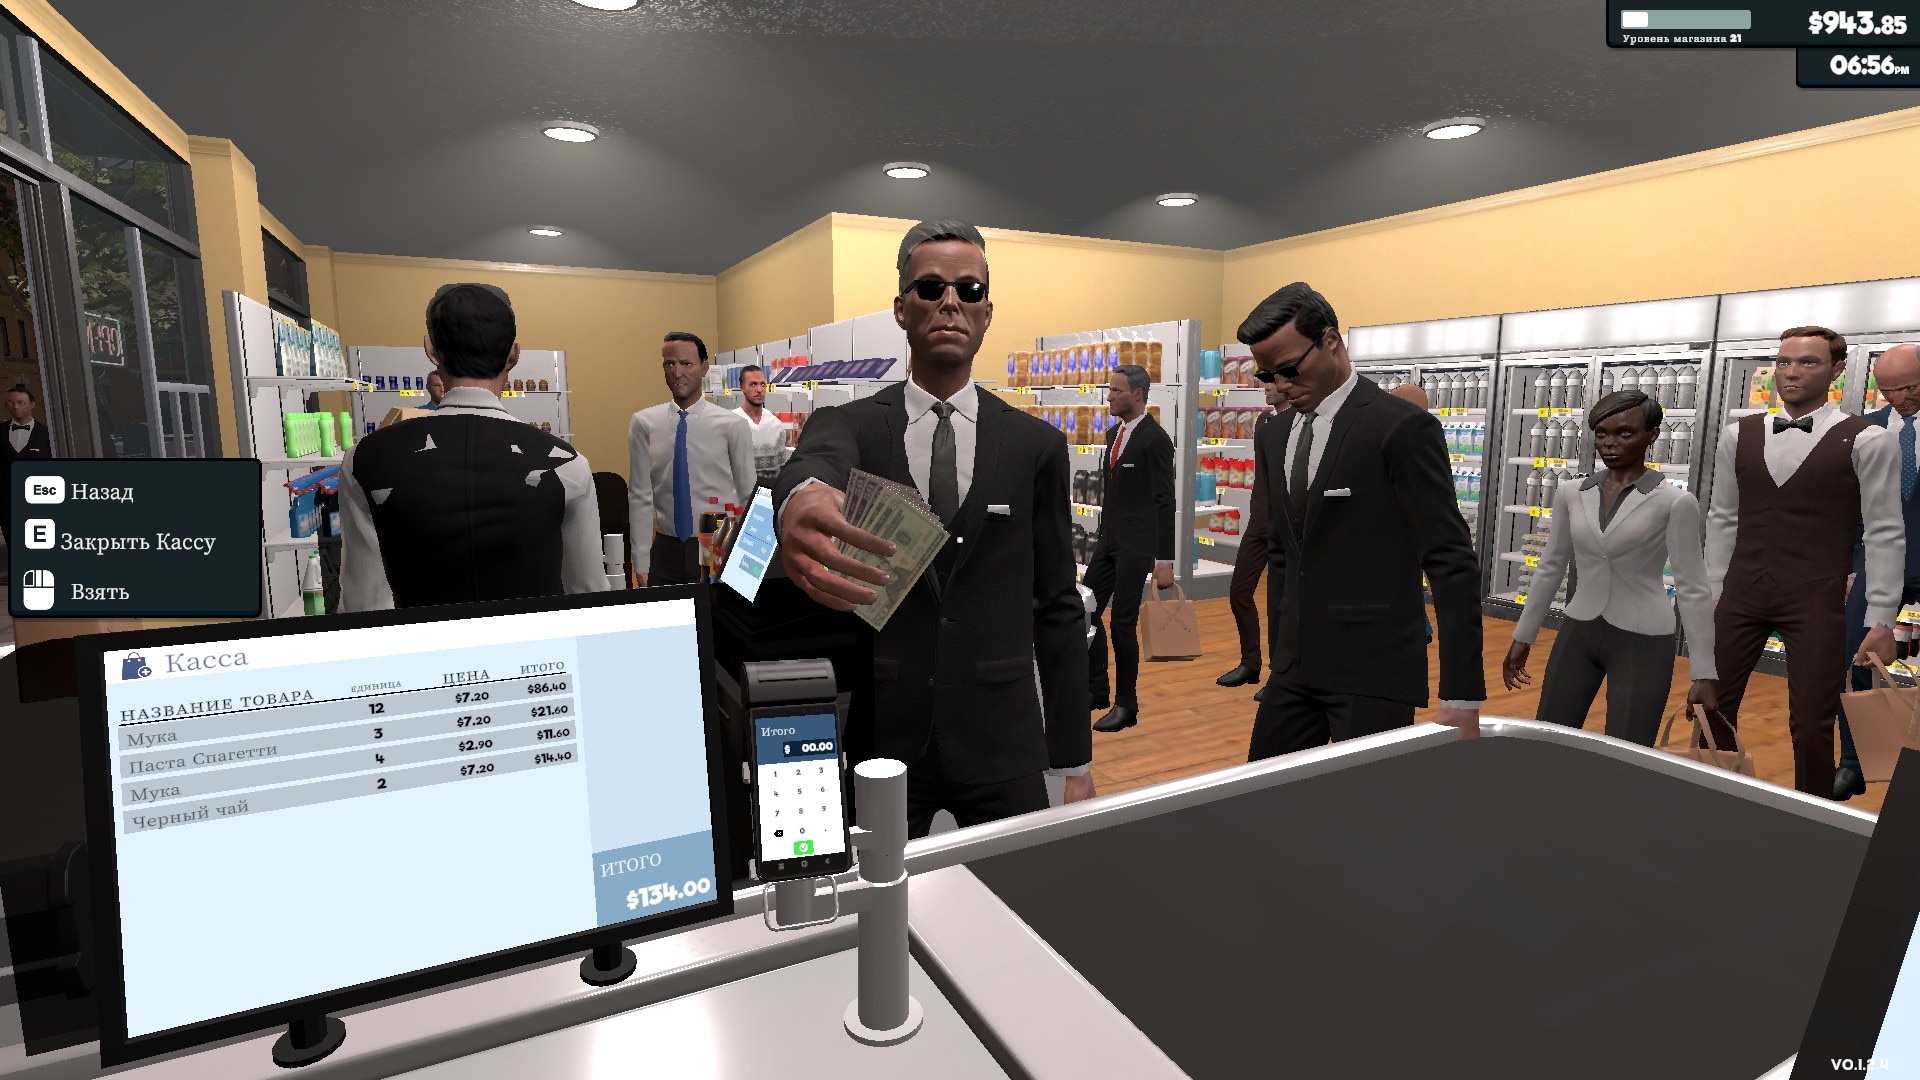 Supermarket Simulator Free Download (v0.1.2.4a) 5 - gamesunlock.com